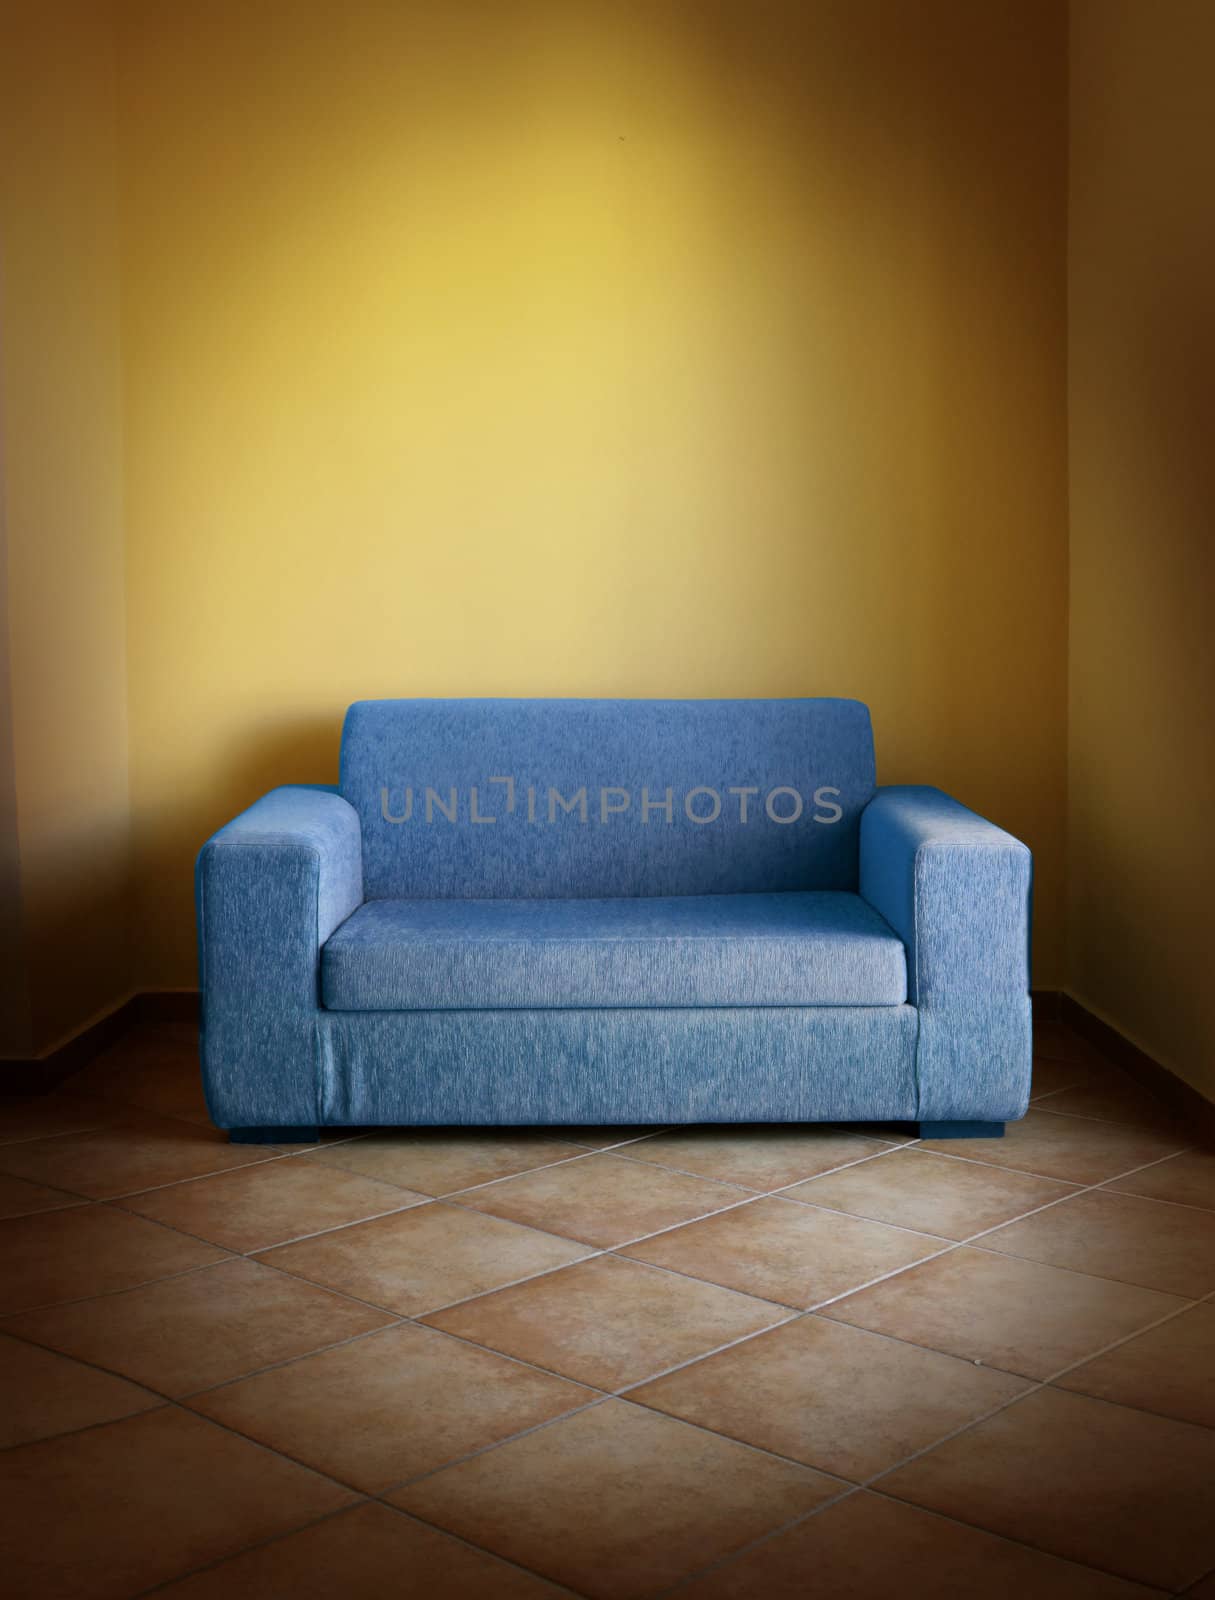 Blue vintage sofa on terracotta tiled floor in yellow room